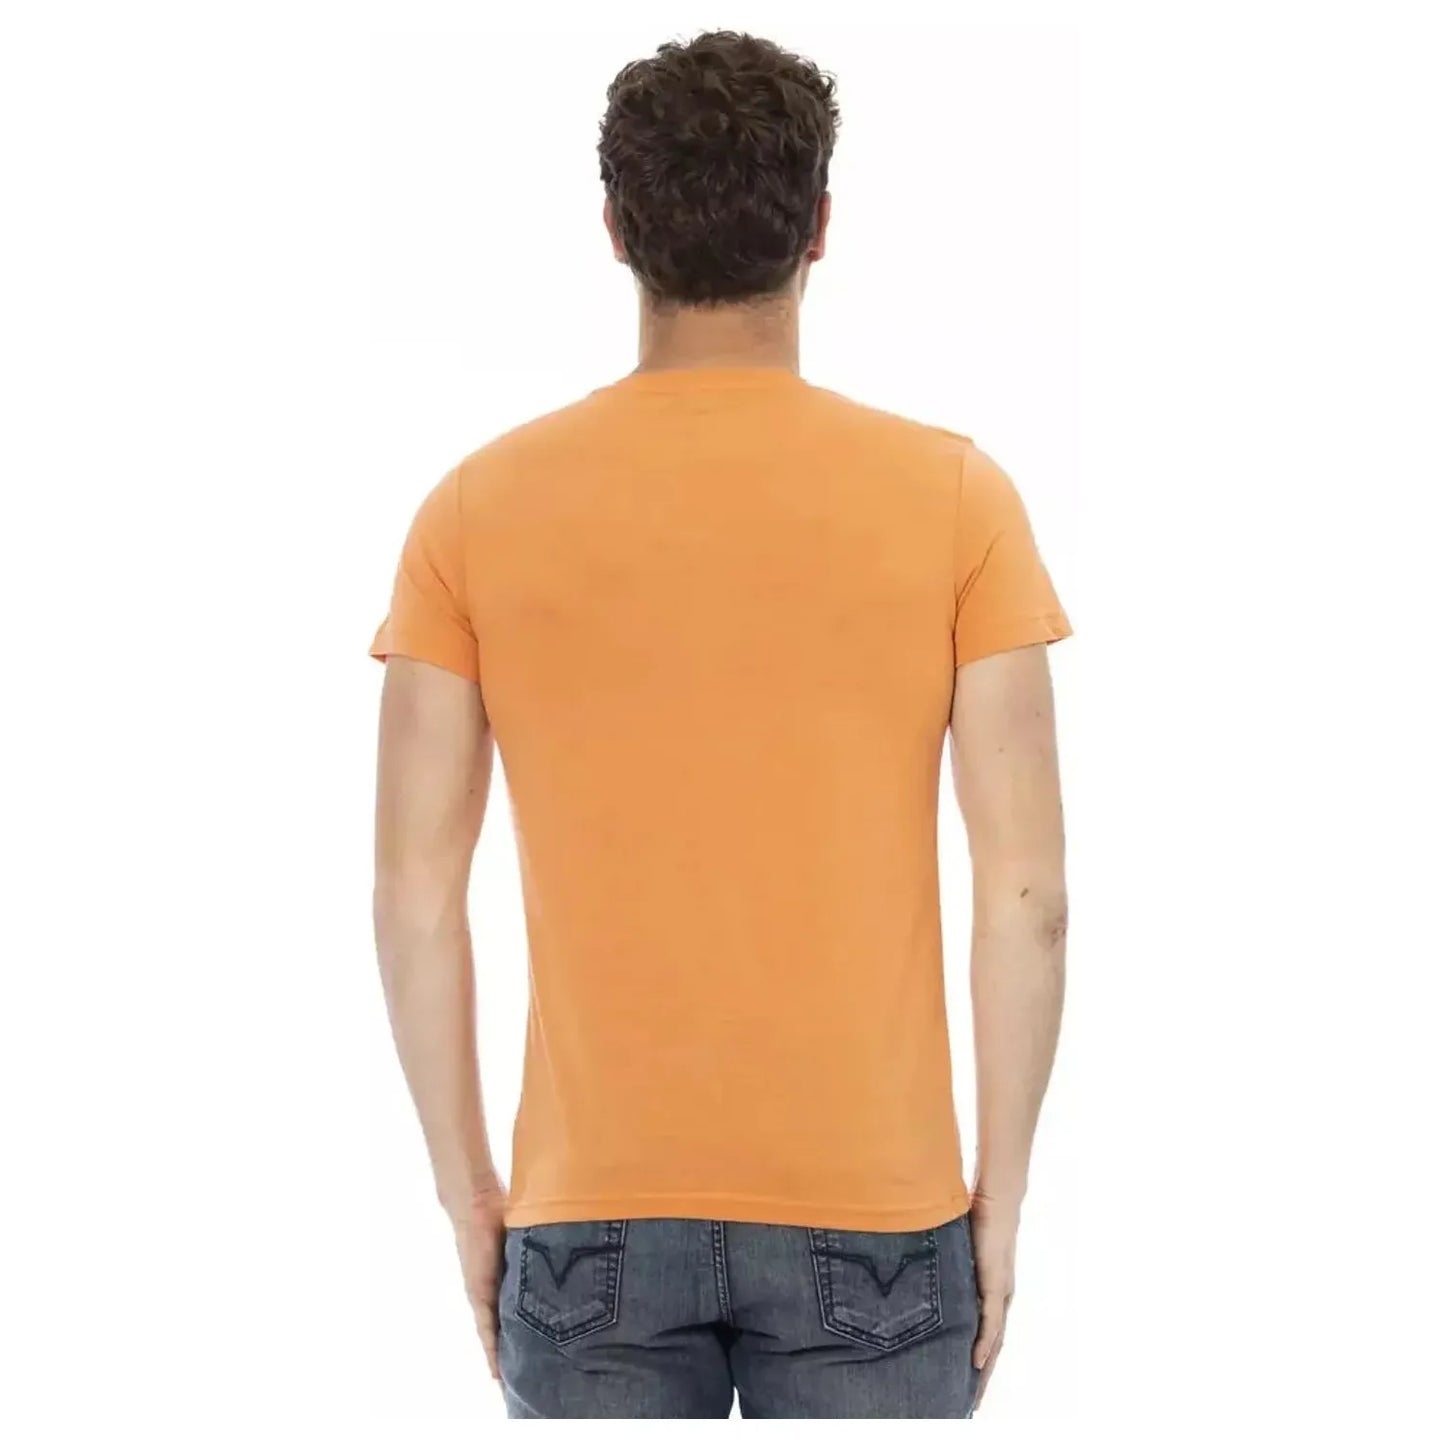 Trussardi Action Orange V-Neck Tee with Front Print orange-cotton-t-shirt-23 product-22823-1805743624-24-1cab706a-2fa.webp